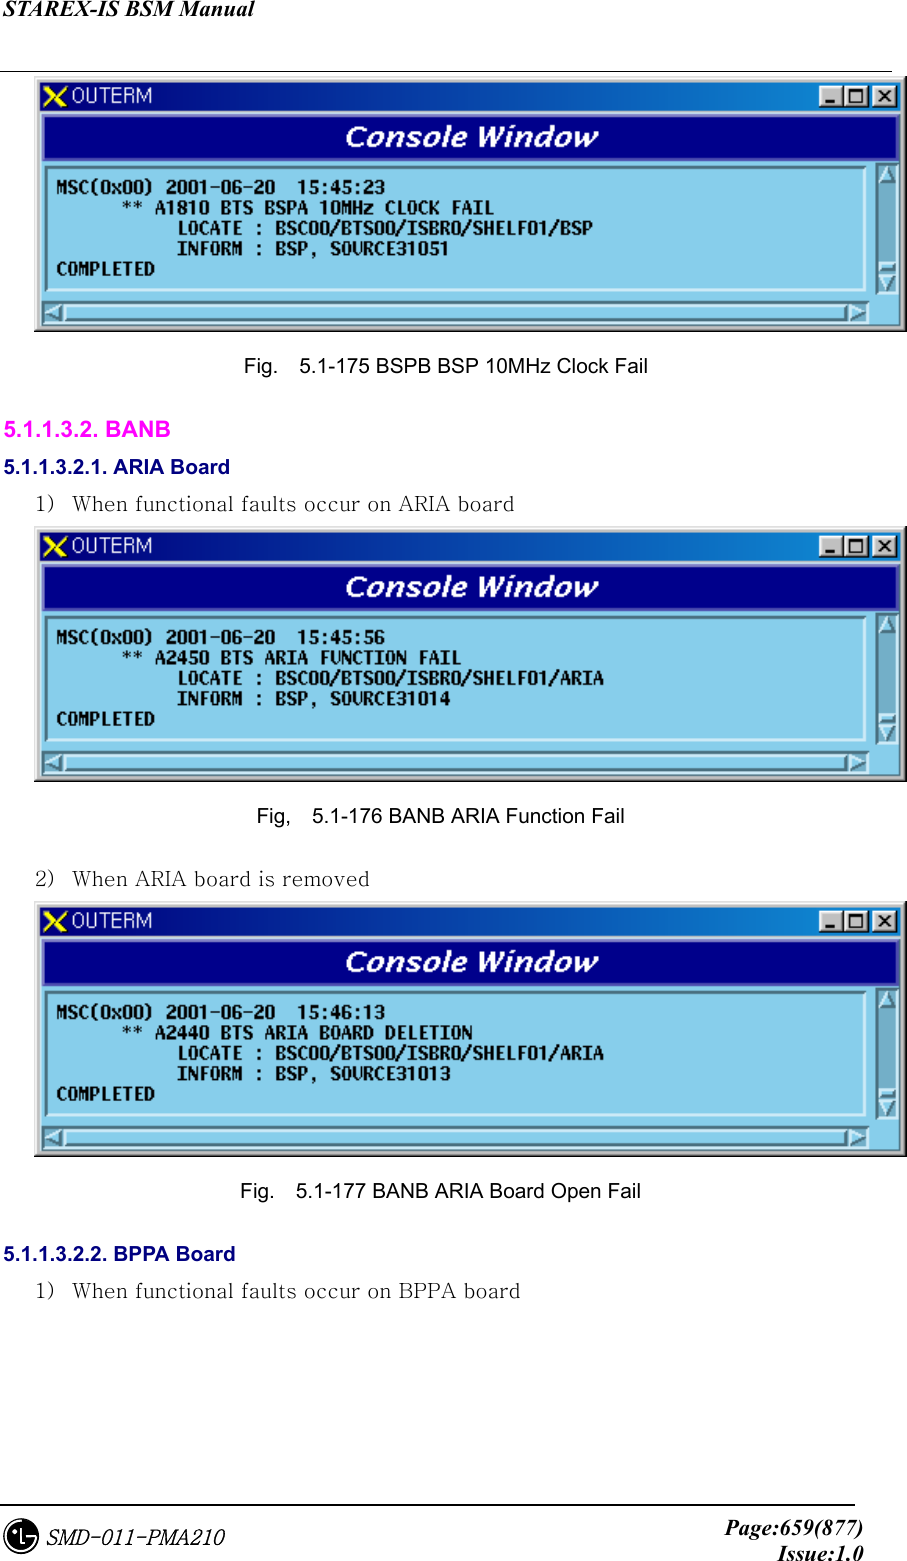 STAREX-IS BSM Manual     Page:659(877)Issue:1.0SMD-011-PMA210    Fig.    5.1-175 BSPB BSP 10MHz Clock Fail 5.1.1.3.2. BANB 5.1.1.3.2.1. ARIA Board 1)  When functional faults occur on ARIA board    Fig,    5.1-176 BANB ARIA Function Fail 2)  When ARIA board is removed  Fig.    5.1-177 BANB ARIA Board Open Fail 5.1.1.3.2.2. BPPA Board 1)  When functional faults occur on BPPA board 